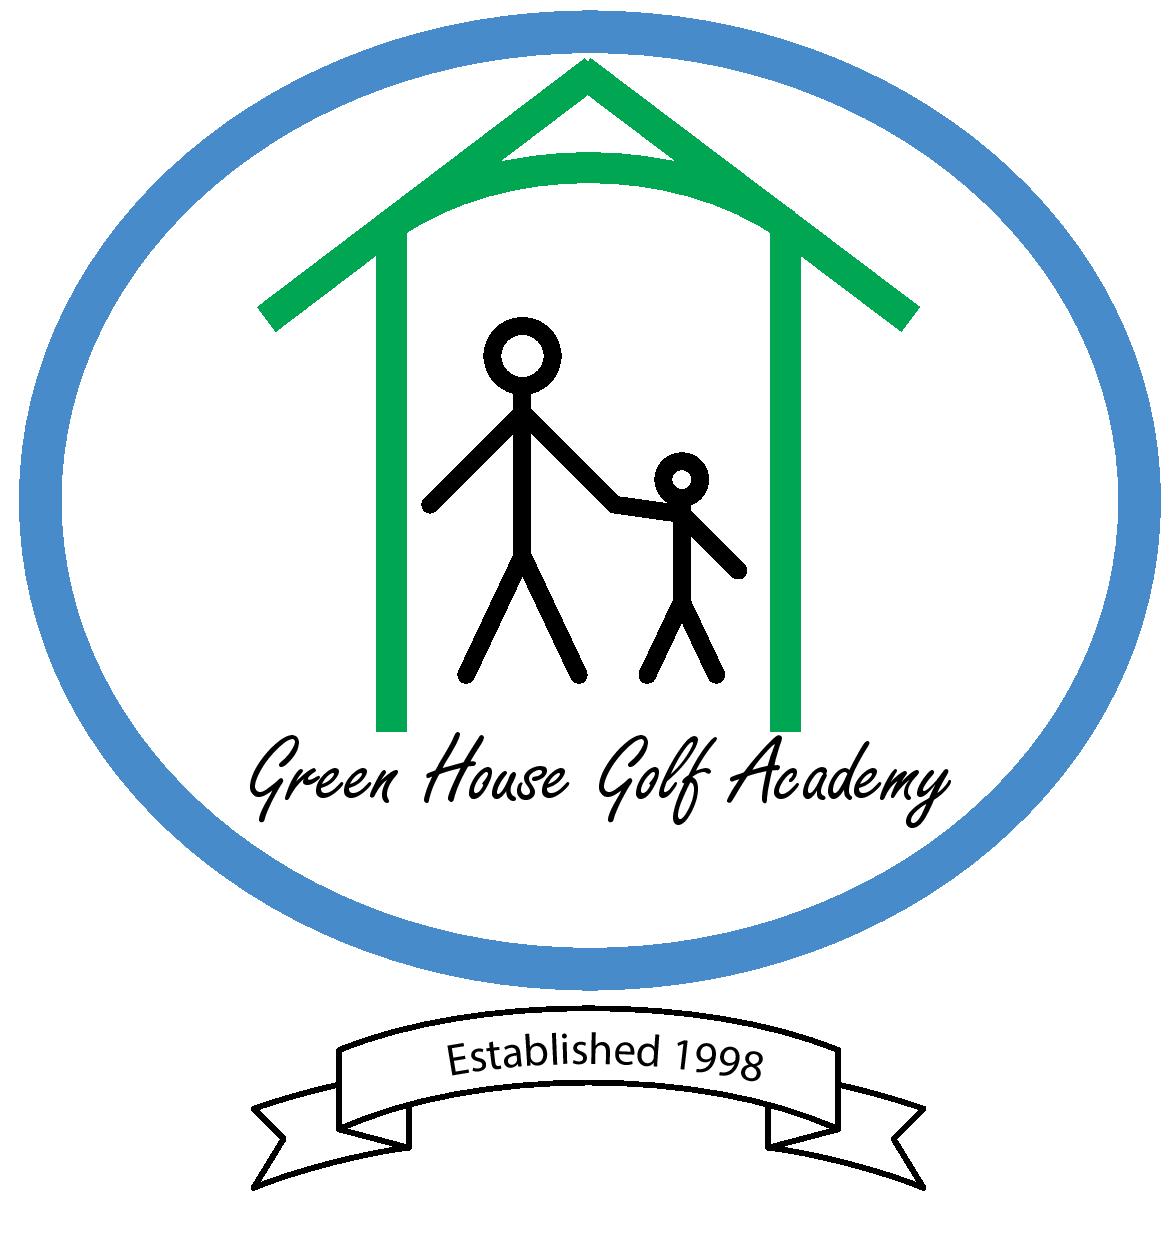 Green House Golf Academy